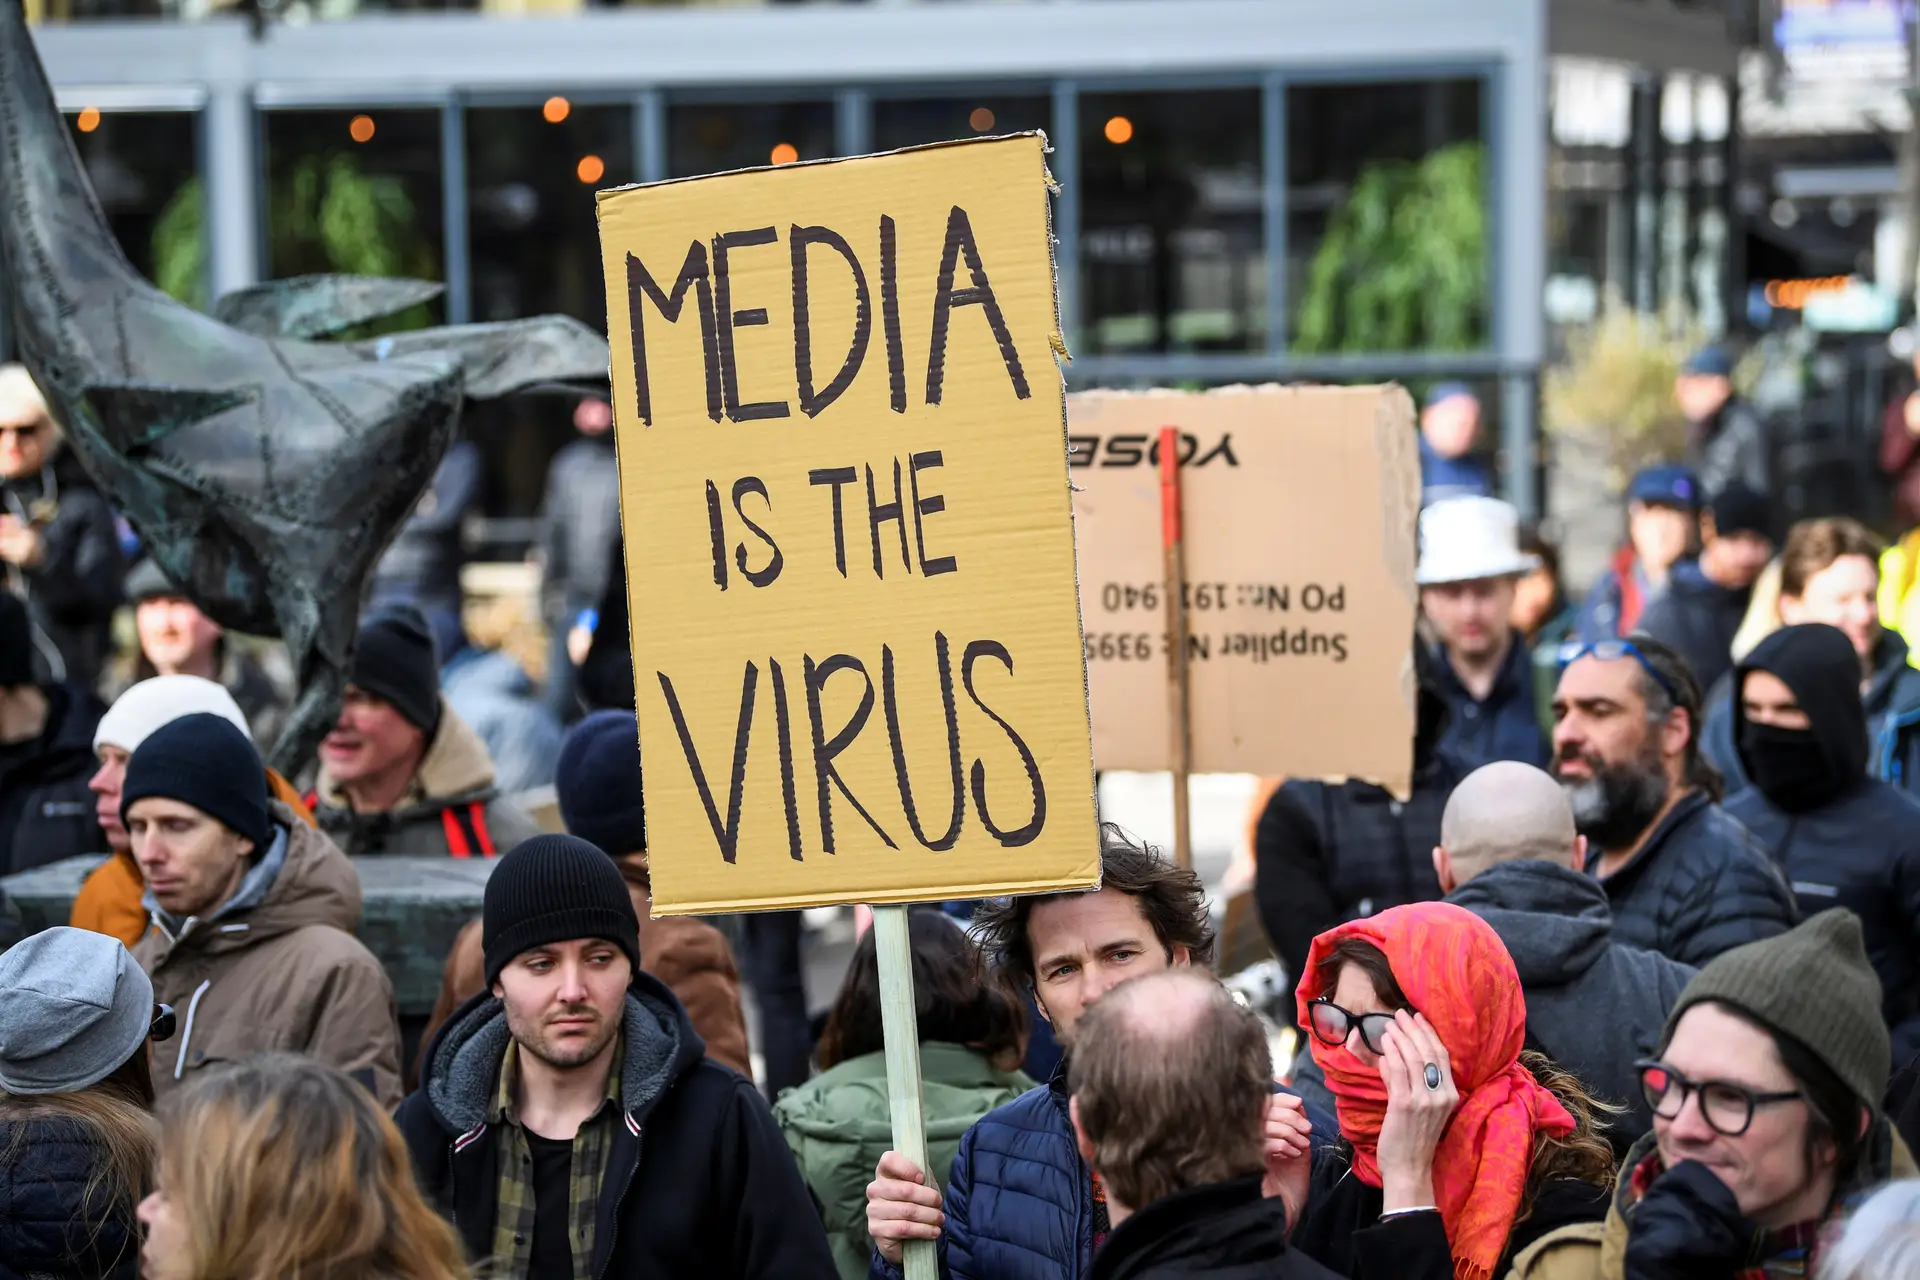 Os “media são o vírus”, acusa-se neste protesto em Malmoe, na Suécia